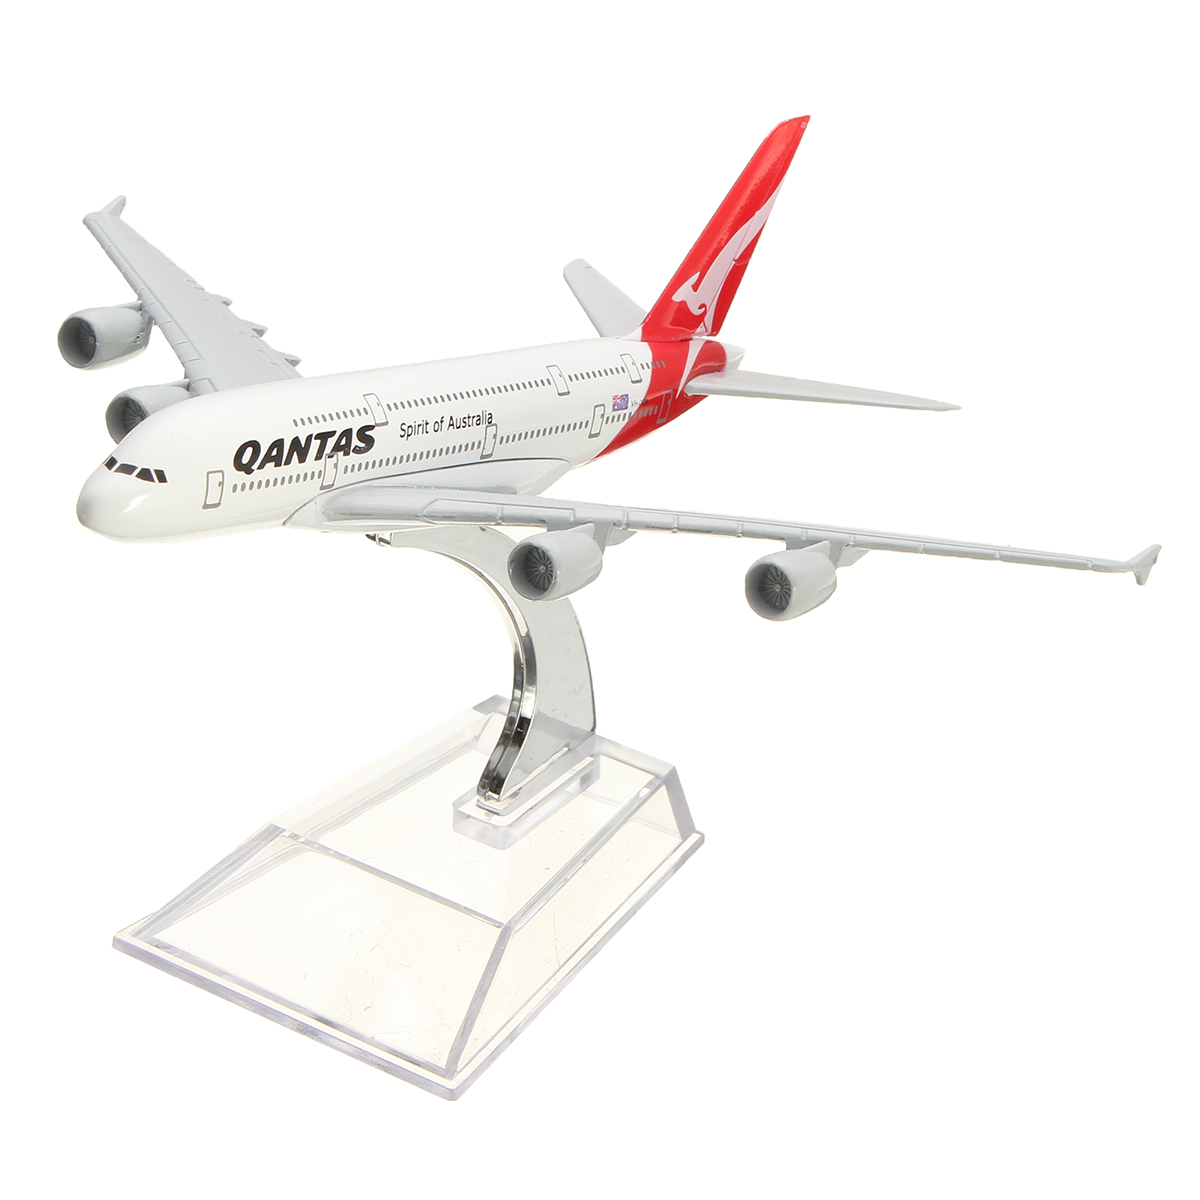 16cm-Airplane-Metal-Plane-Model-Aircraft-A380-AUSTRALIA-QANTAS-Aeroplane-Scale-Desk-Toy-1098494